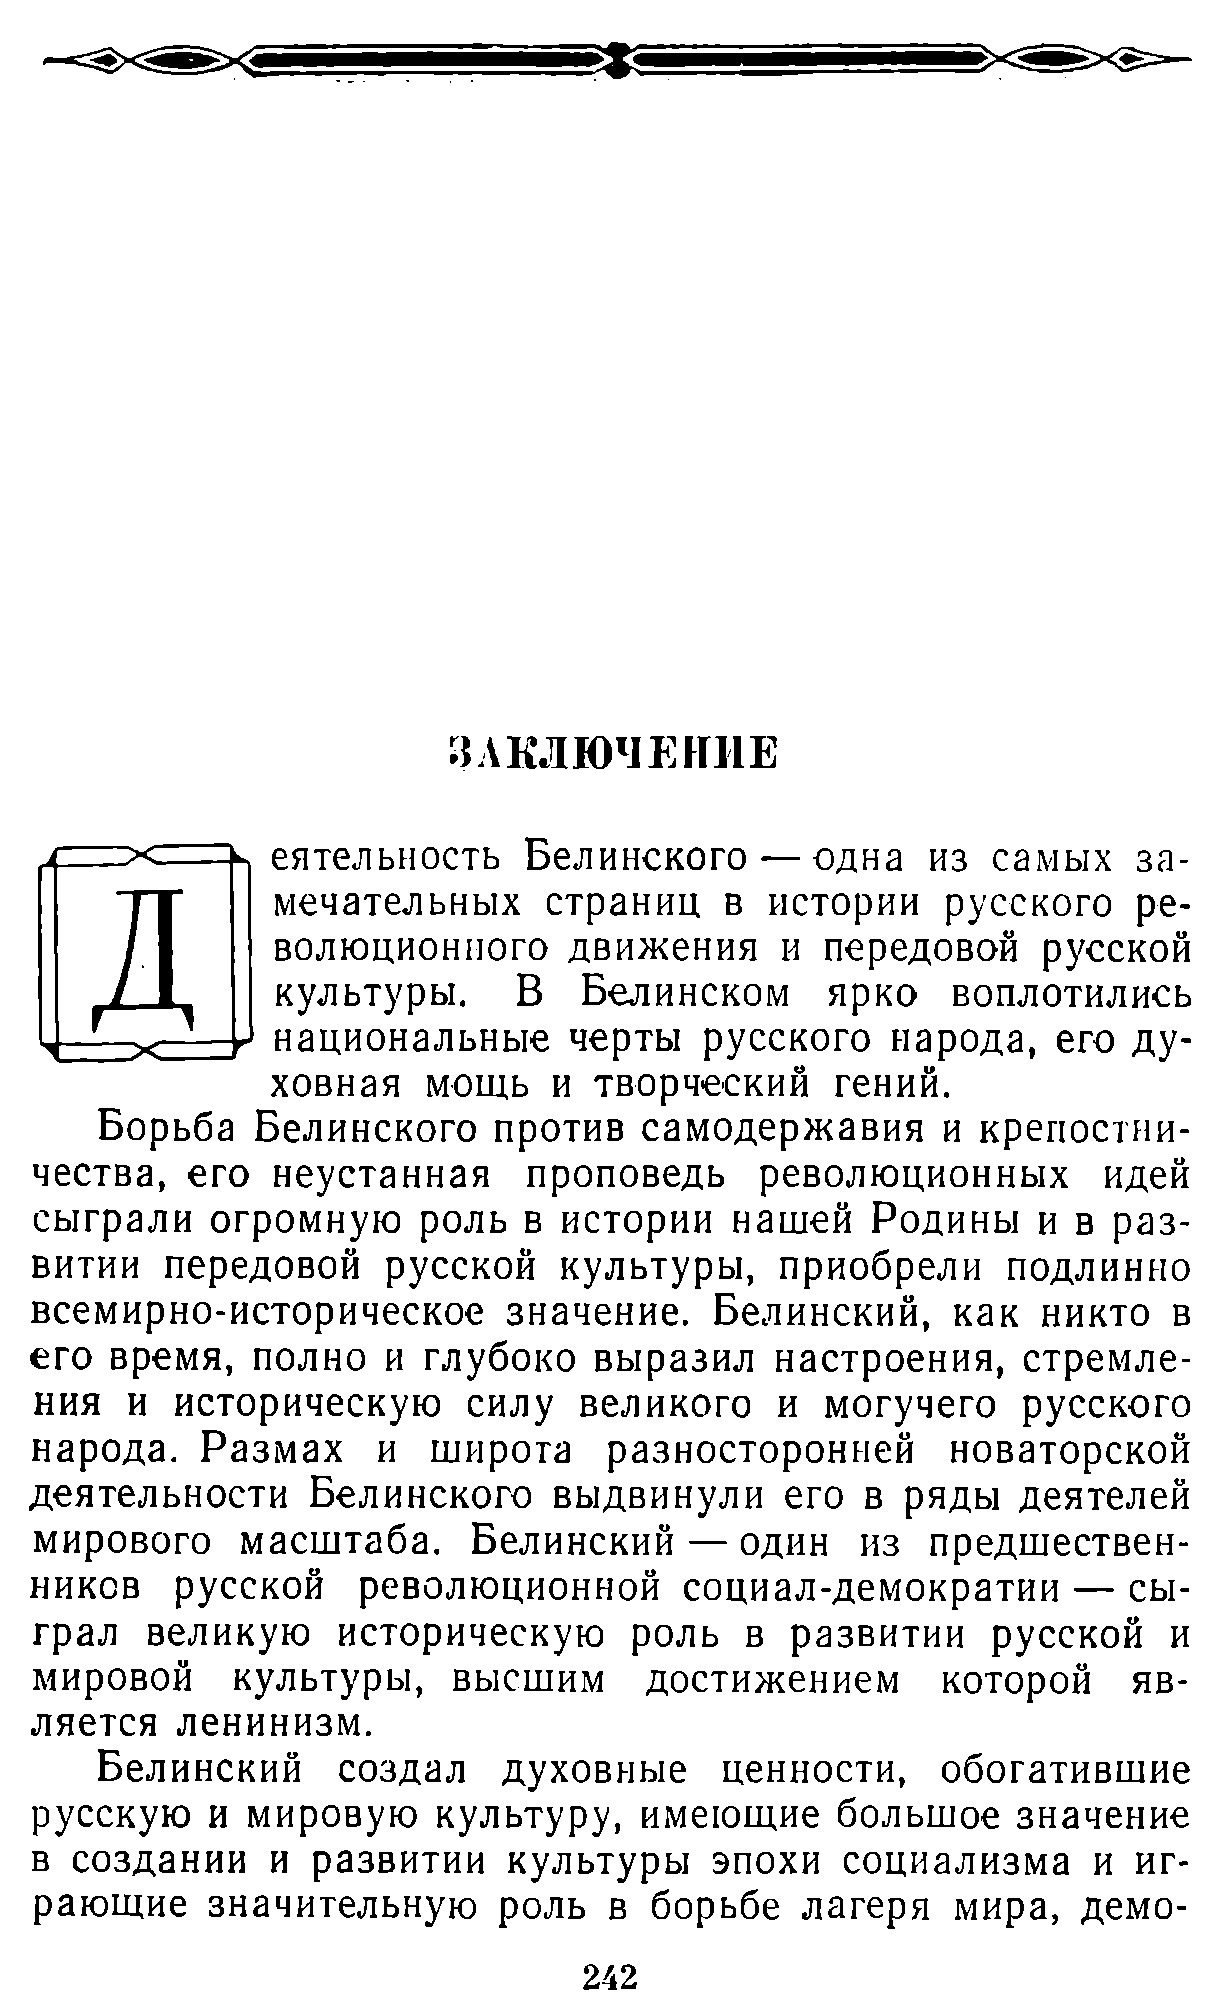 Historical views of Vissarion Belinsky - , Revolutionaries, Revolution, Socialism, , Books, Российская империя, Art, Longpost, Vissarion Belinsky